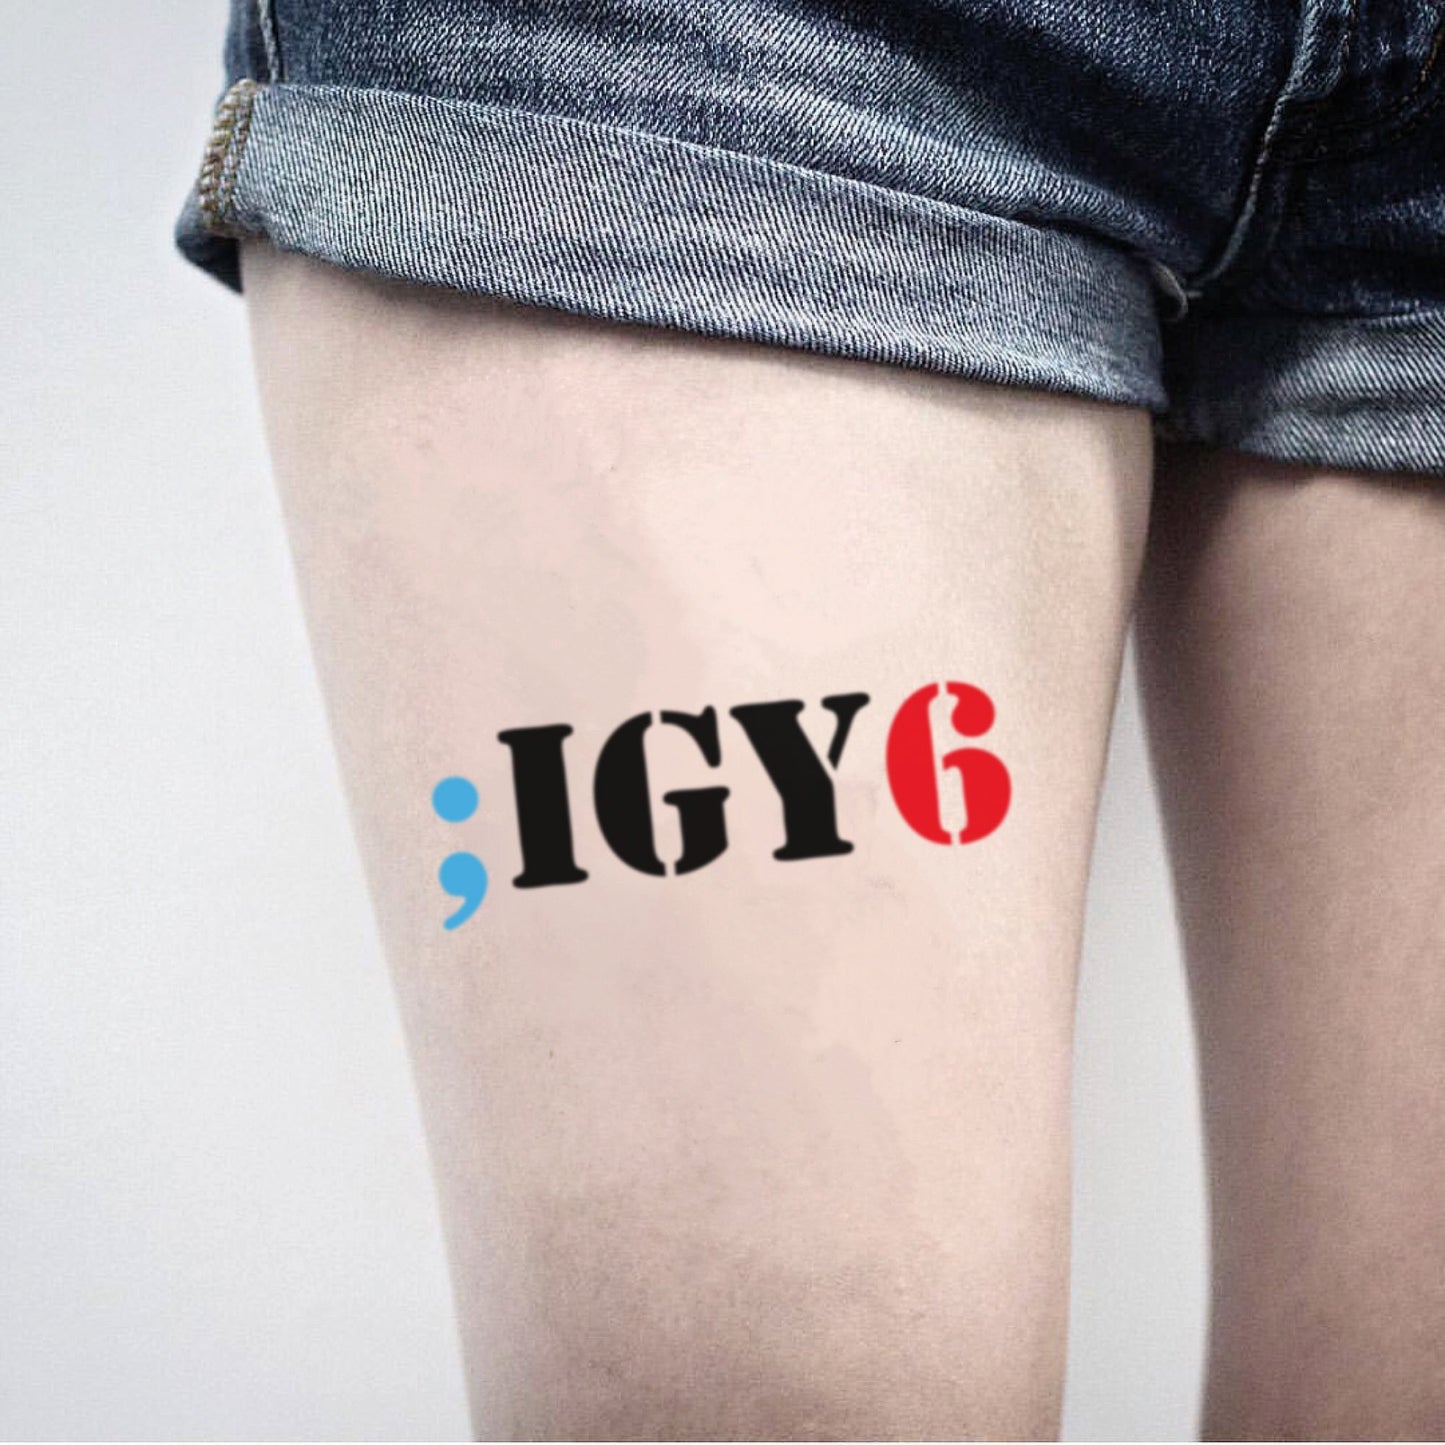 fake medium i got your six - igy6 ptsd lettering temporary tattoo sticker design idea on thigh for guys men